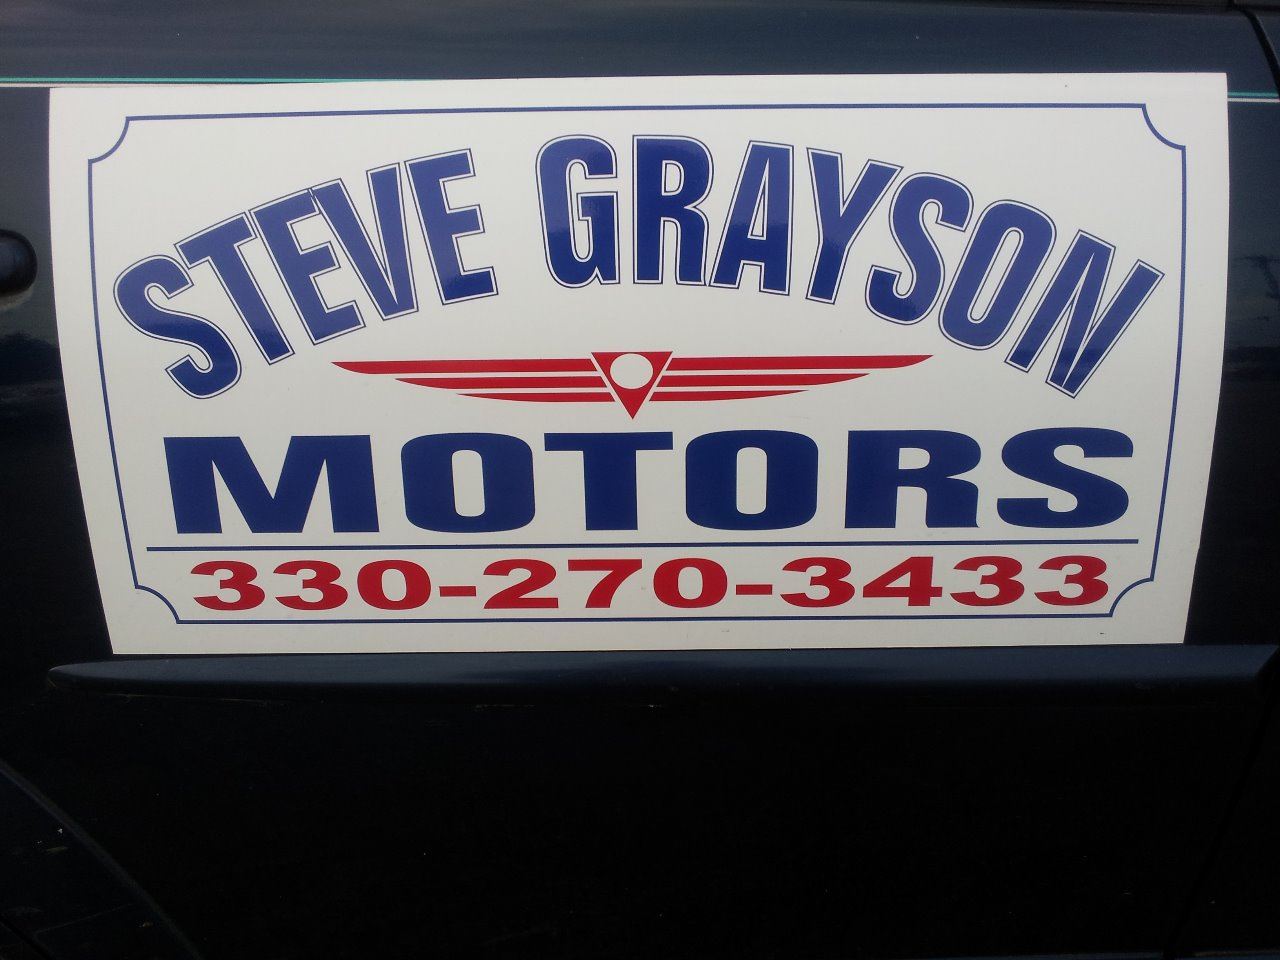 STEVE GRAYSON MOTORS